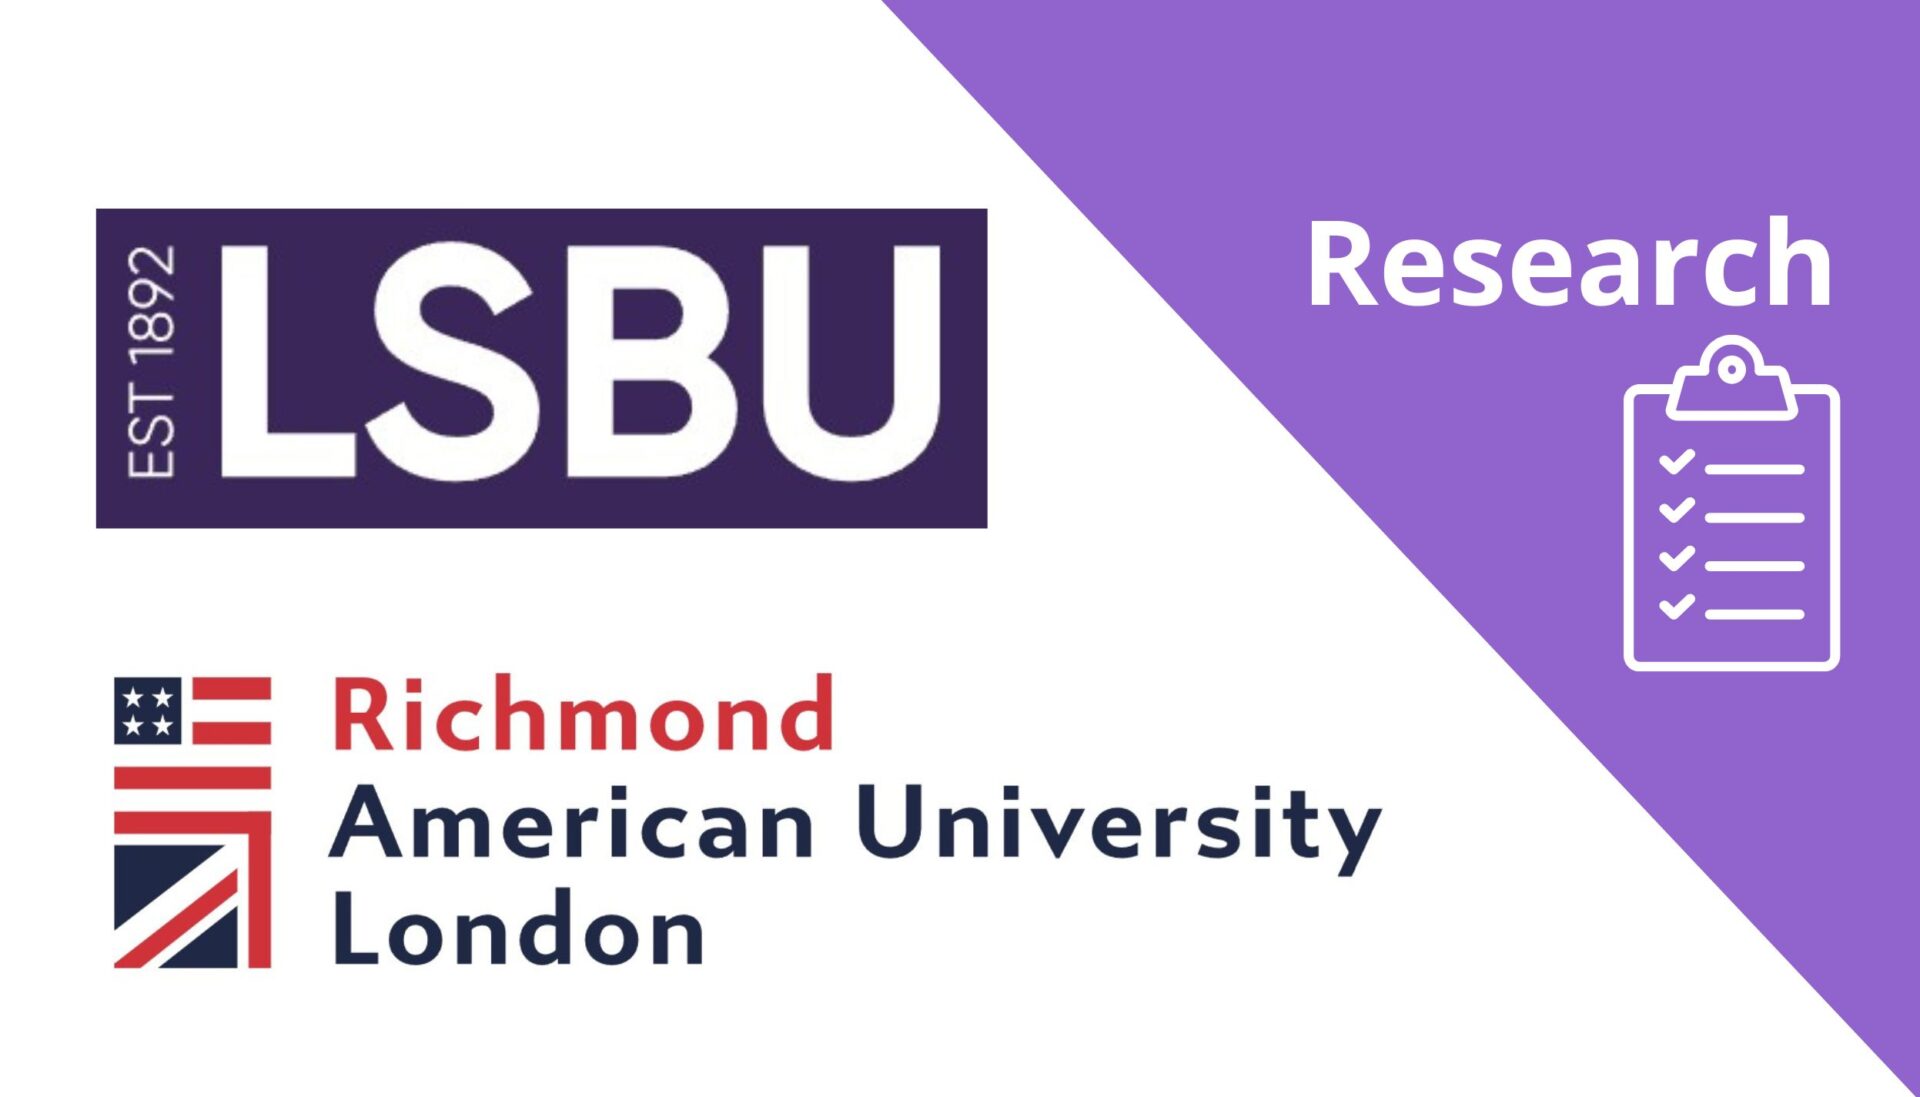 London South Bank University and Richmond American University London logos